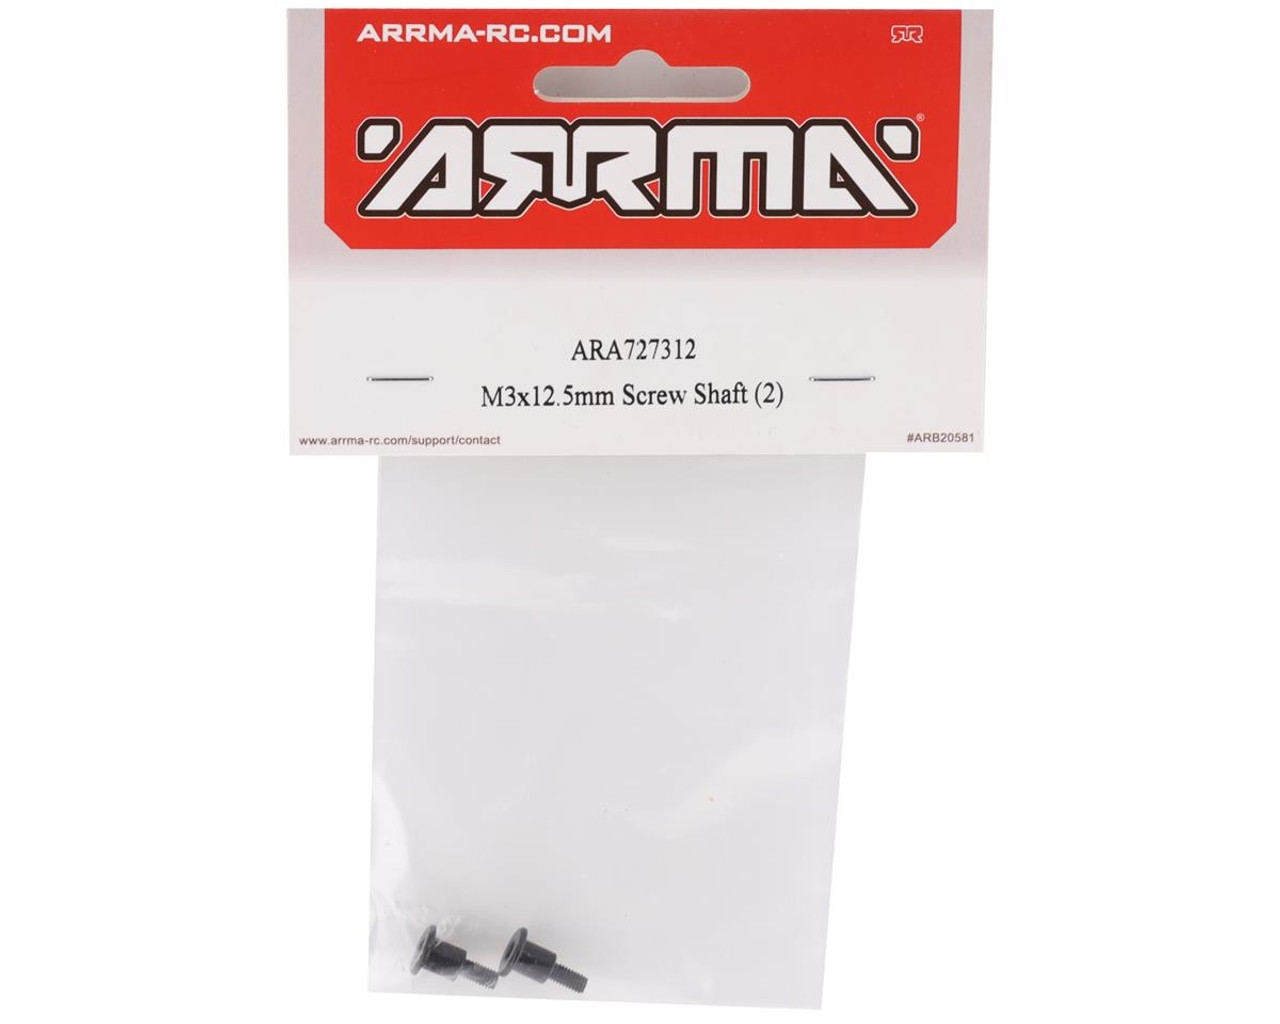 Arrma 3x12.5mm Screw Shaft (2)